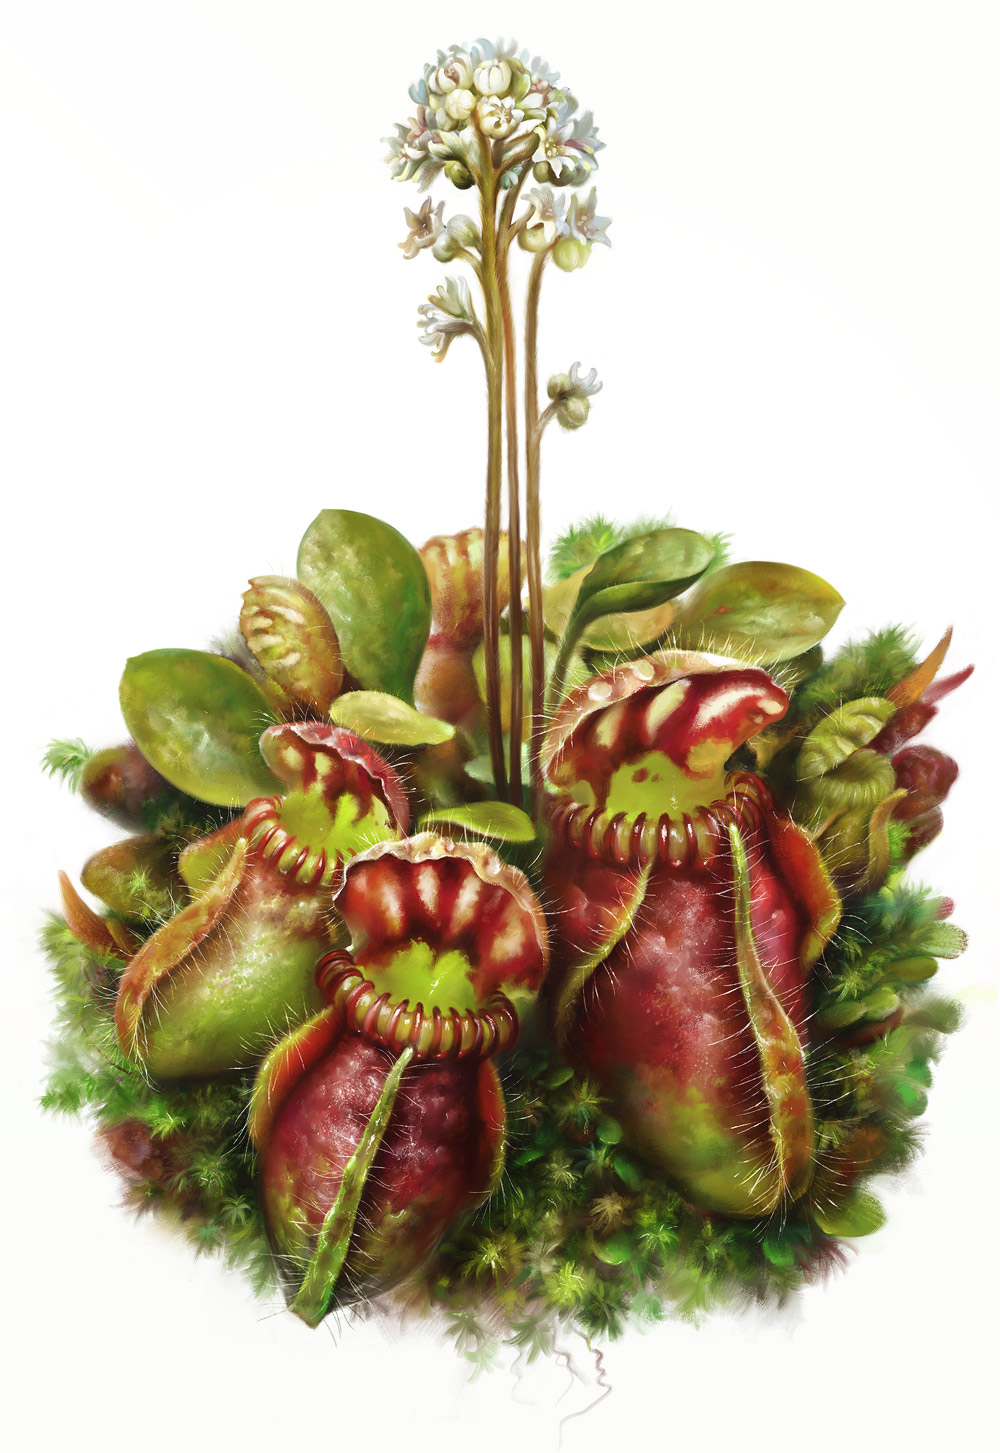 Eldar zakirov 2016   botanics. cephalotus follicularis 675a  2 